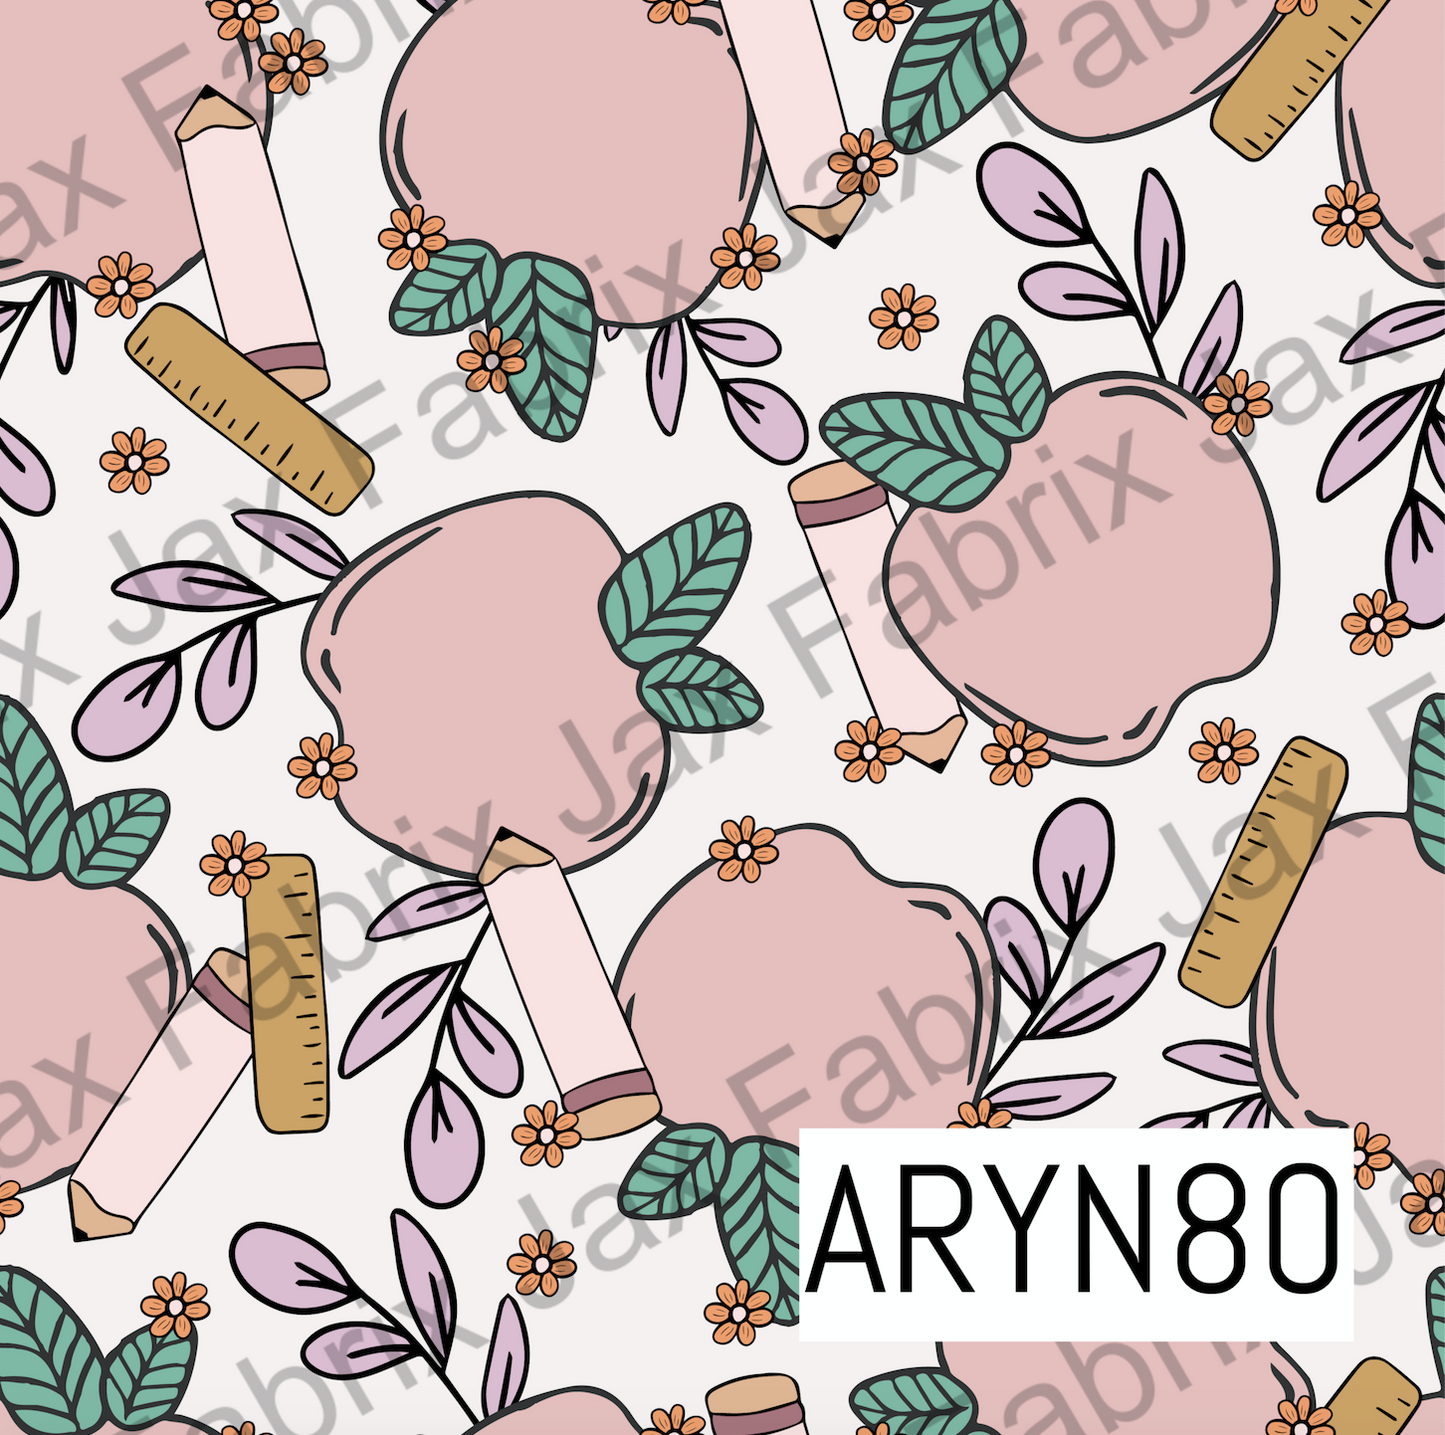 Apples ARYN80